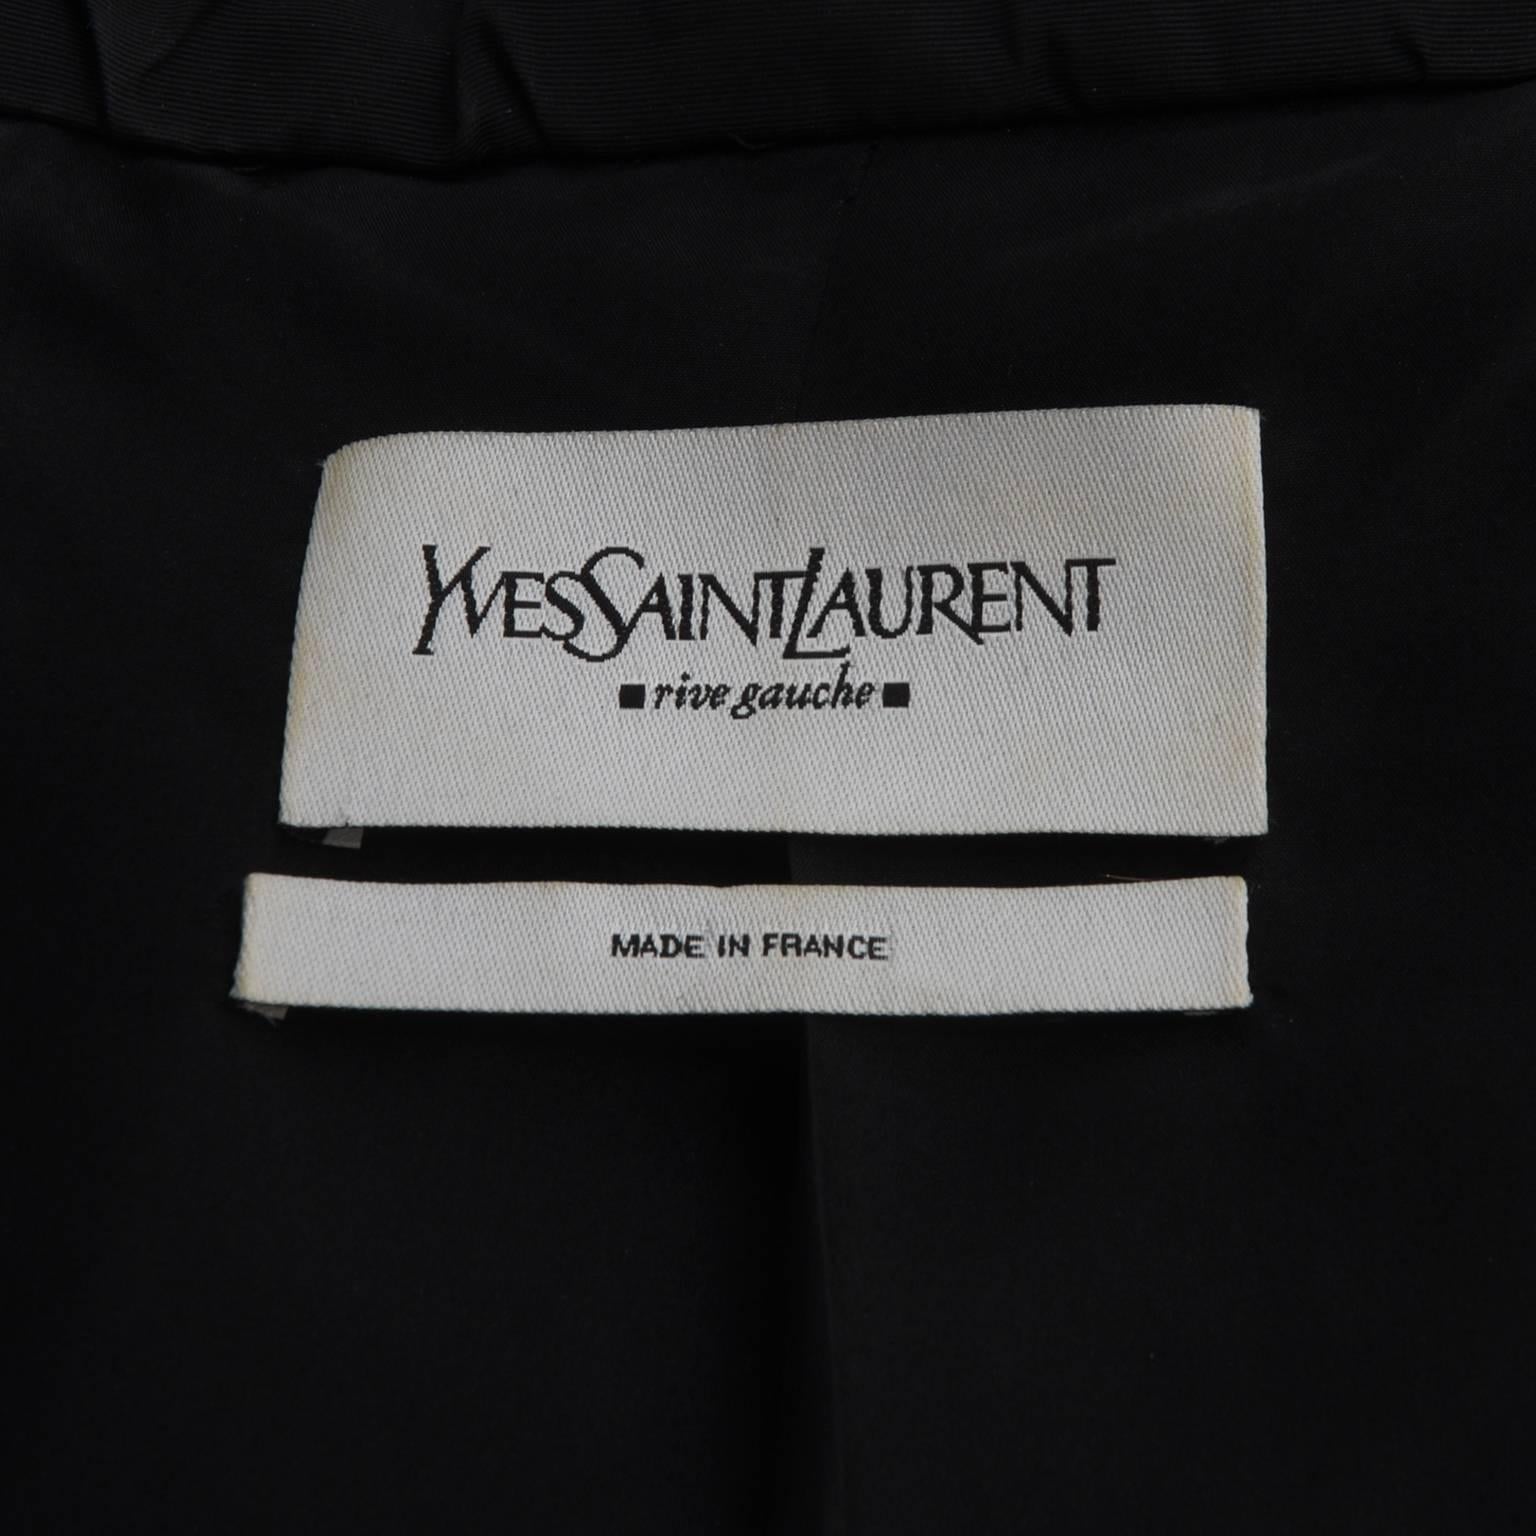 YSL Yves Saint Laurent Black Ruched Velvet Trim Tie Jacket SZ 42 For Sale 1